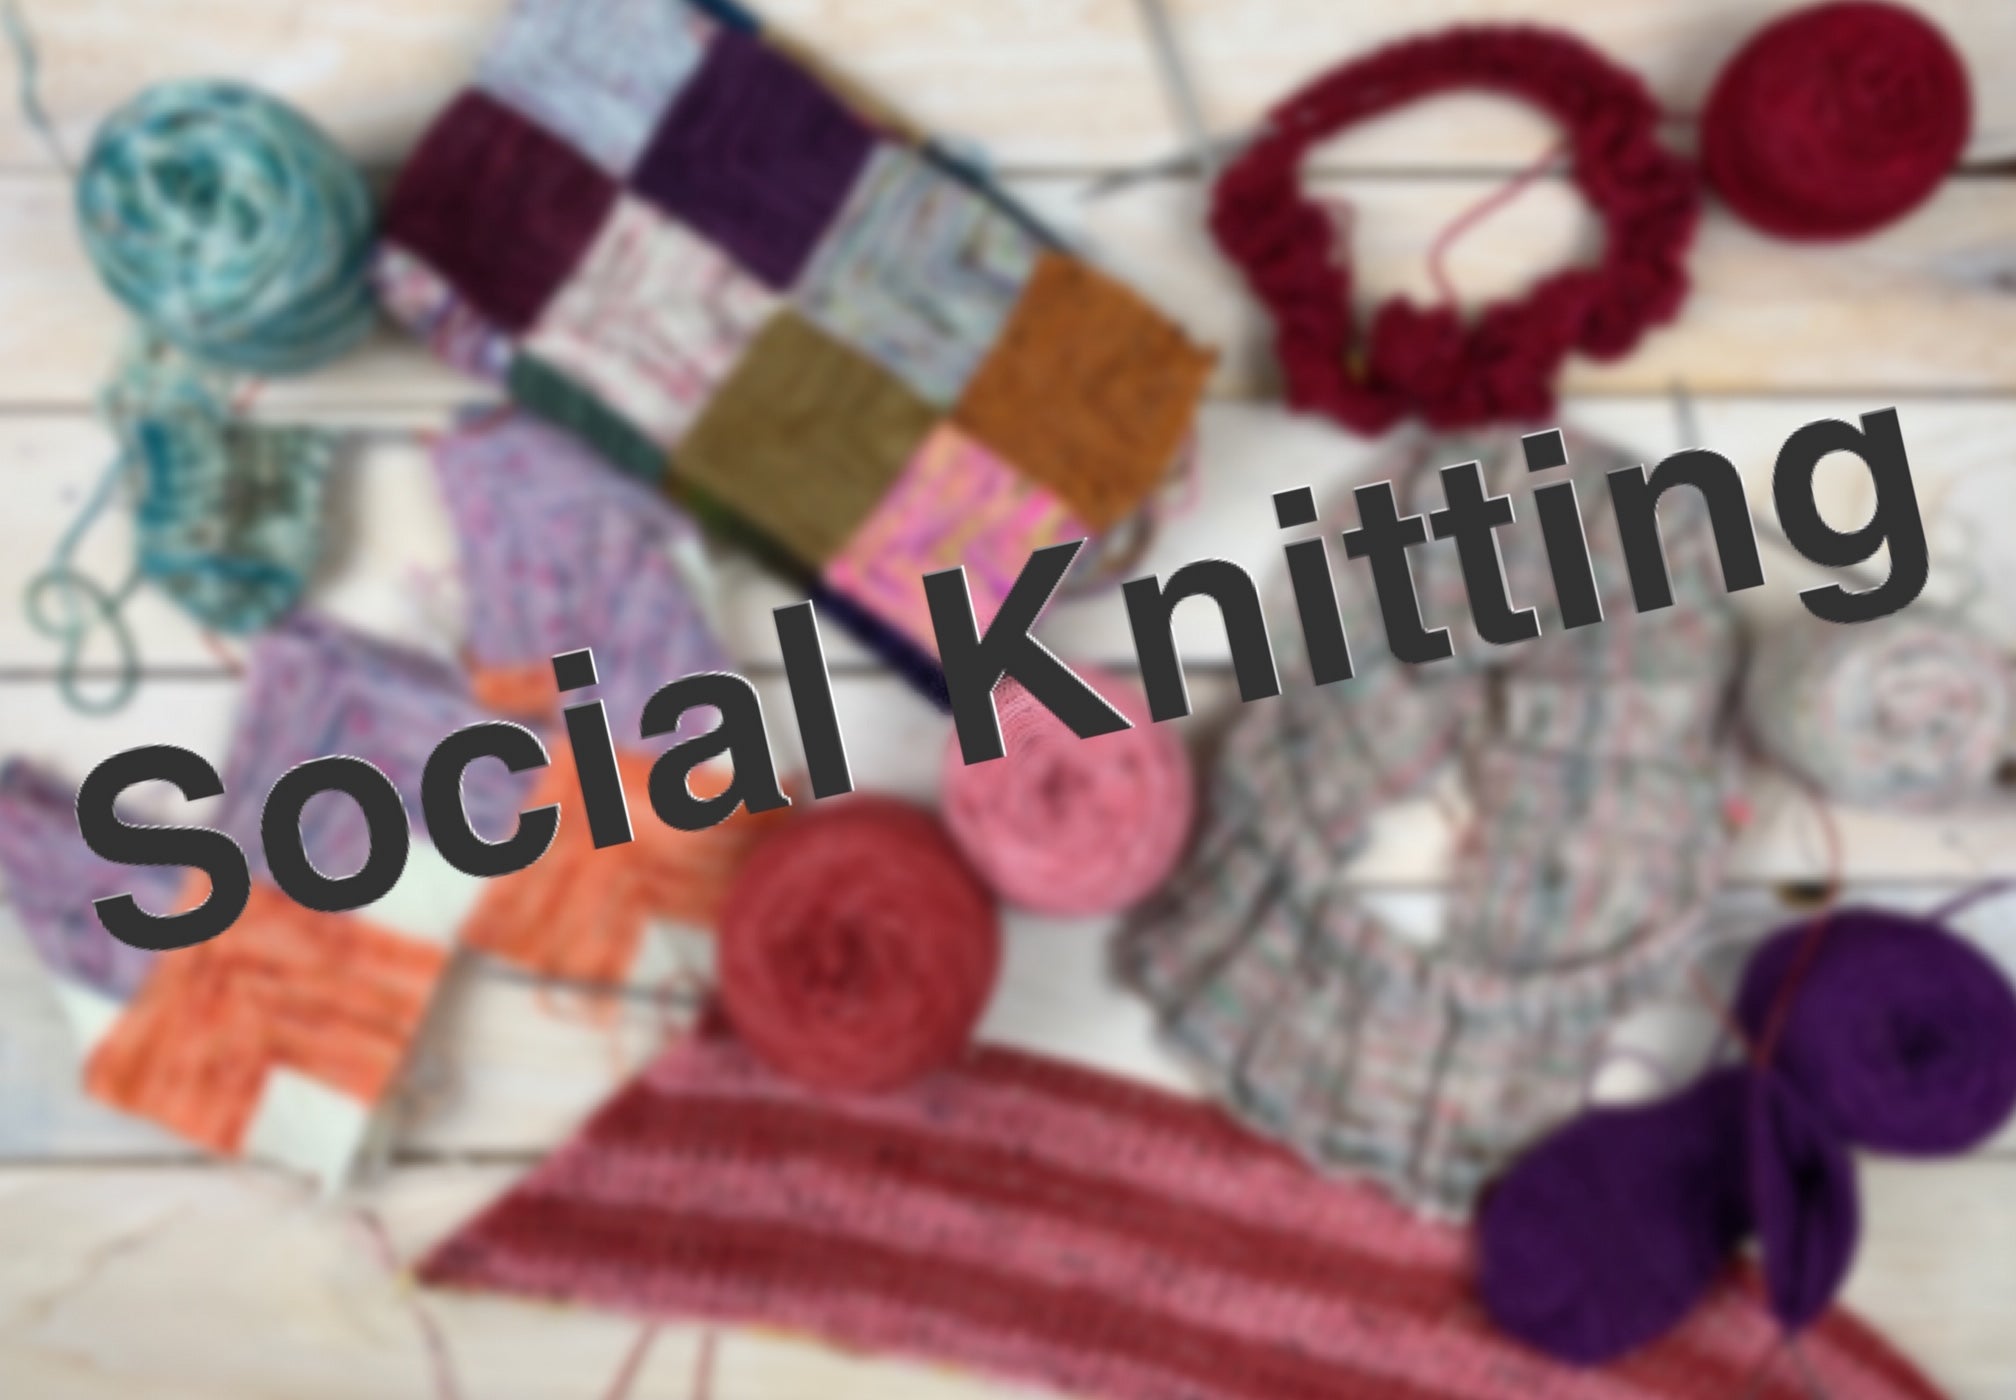 Social Knitting